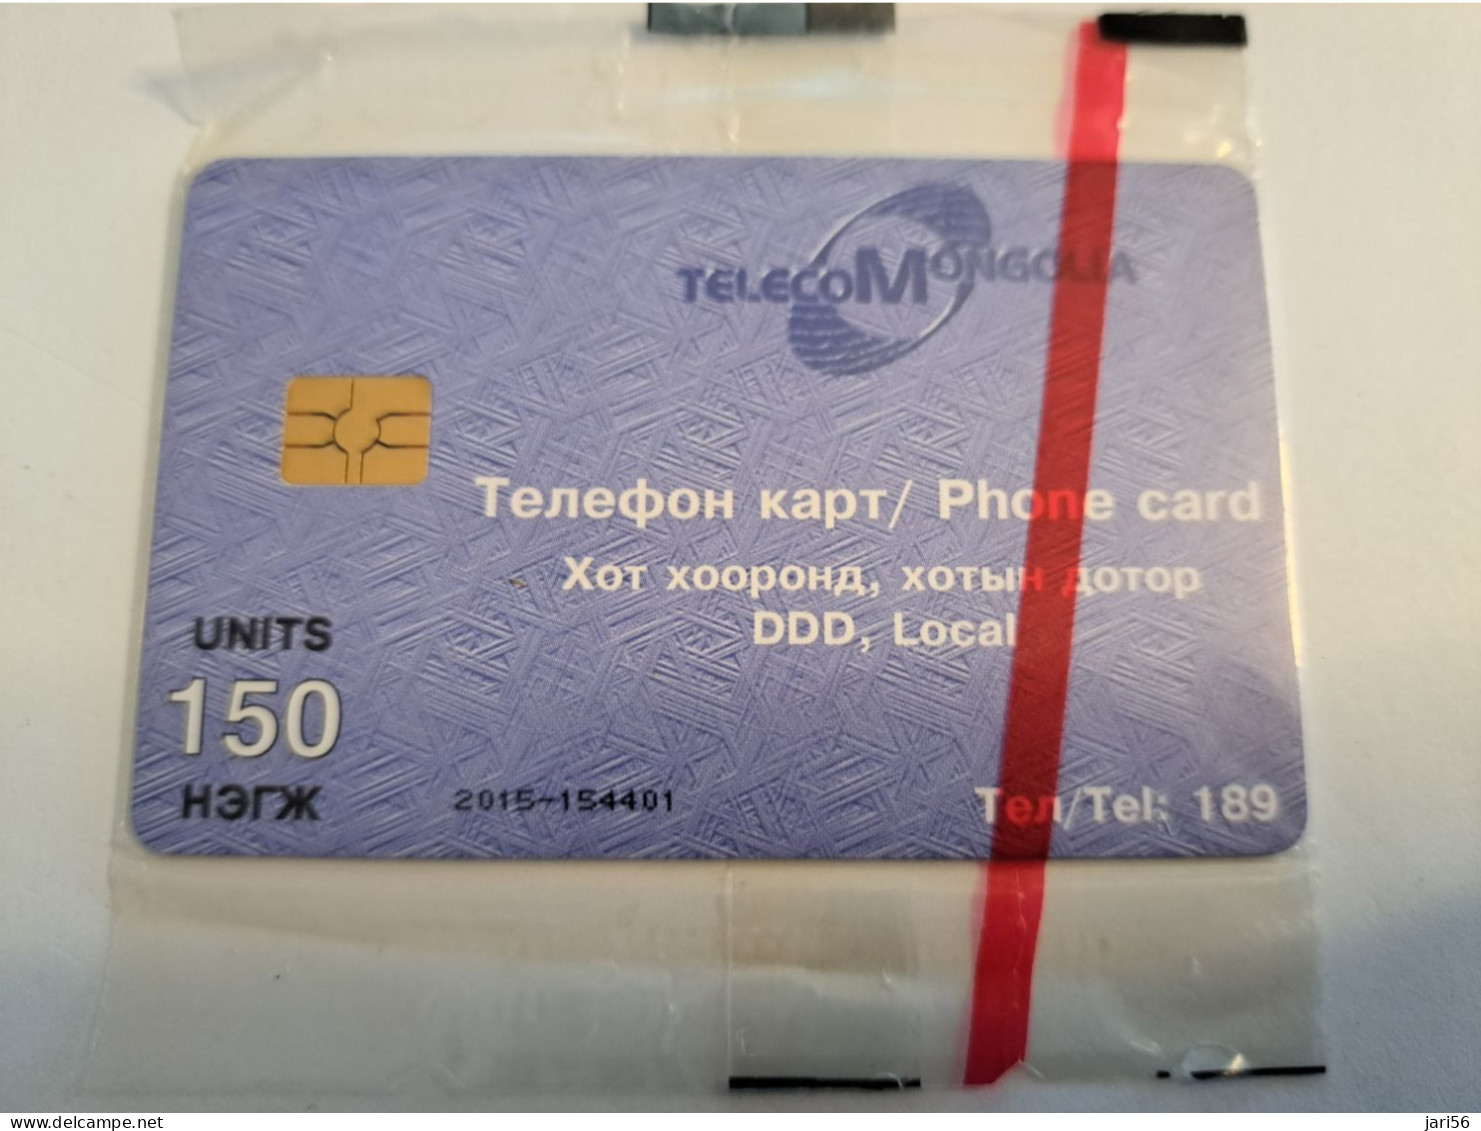 MONGOLIA  CHIPCARD / 150 UNITS / TELECO/MONGOLIA / MOUNTAIN/LAKE  MINT CARD / SEALED IN WRAPPER ** 16045 ** - Mongolië